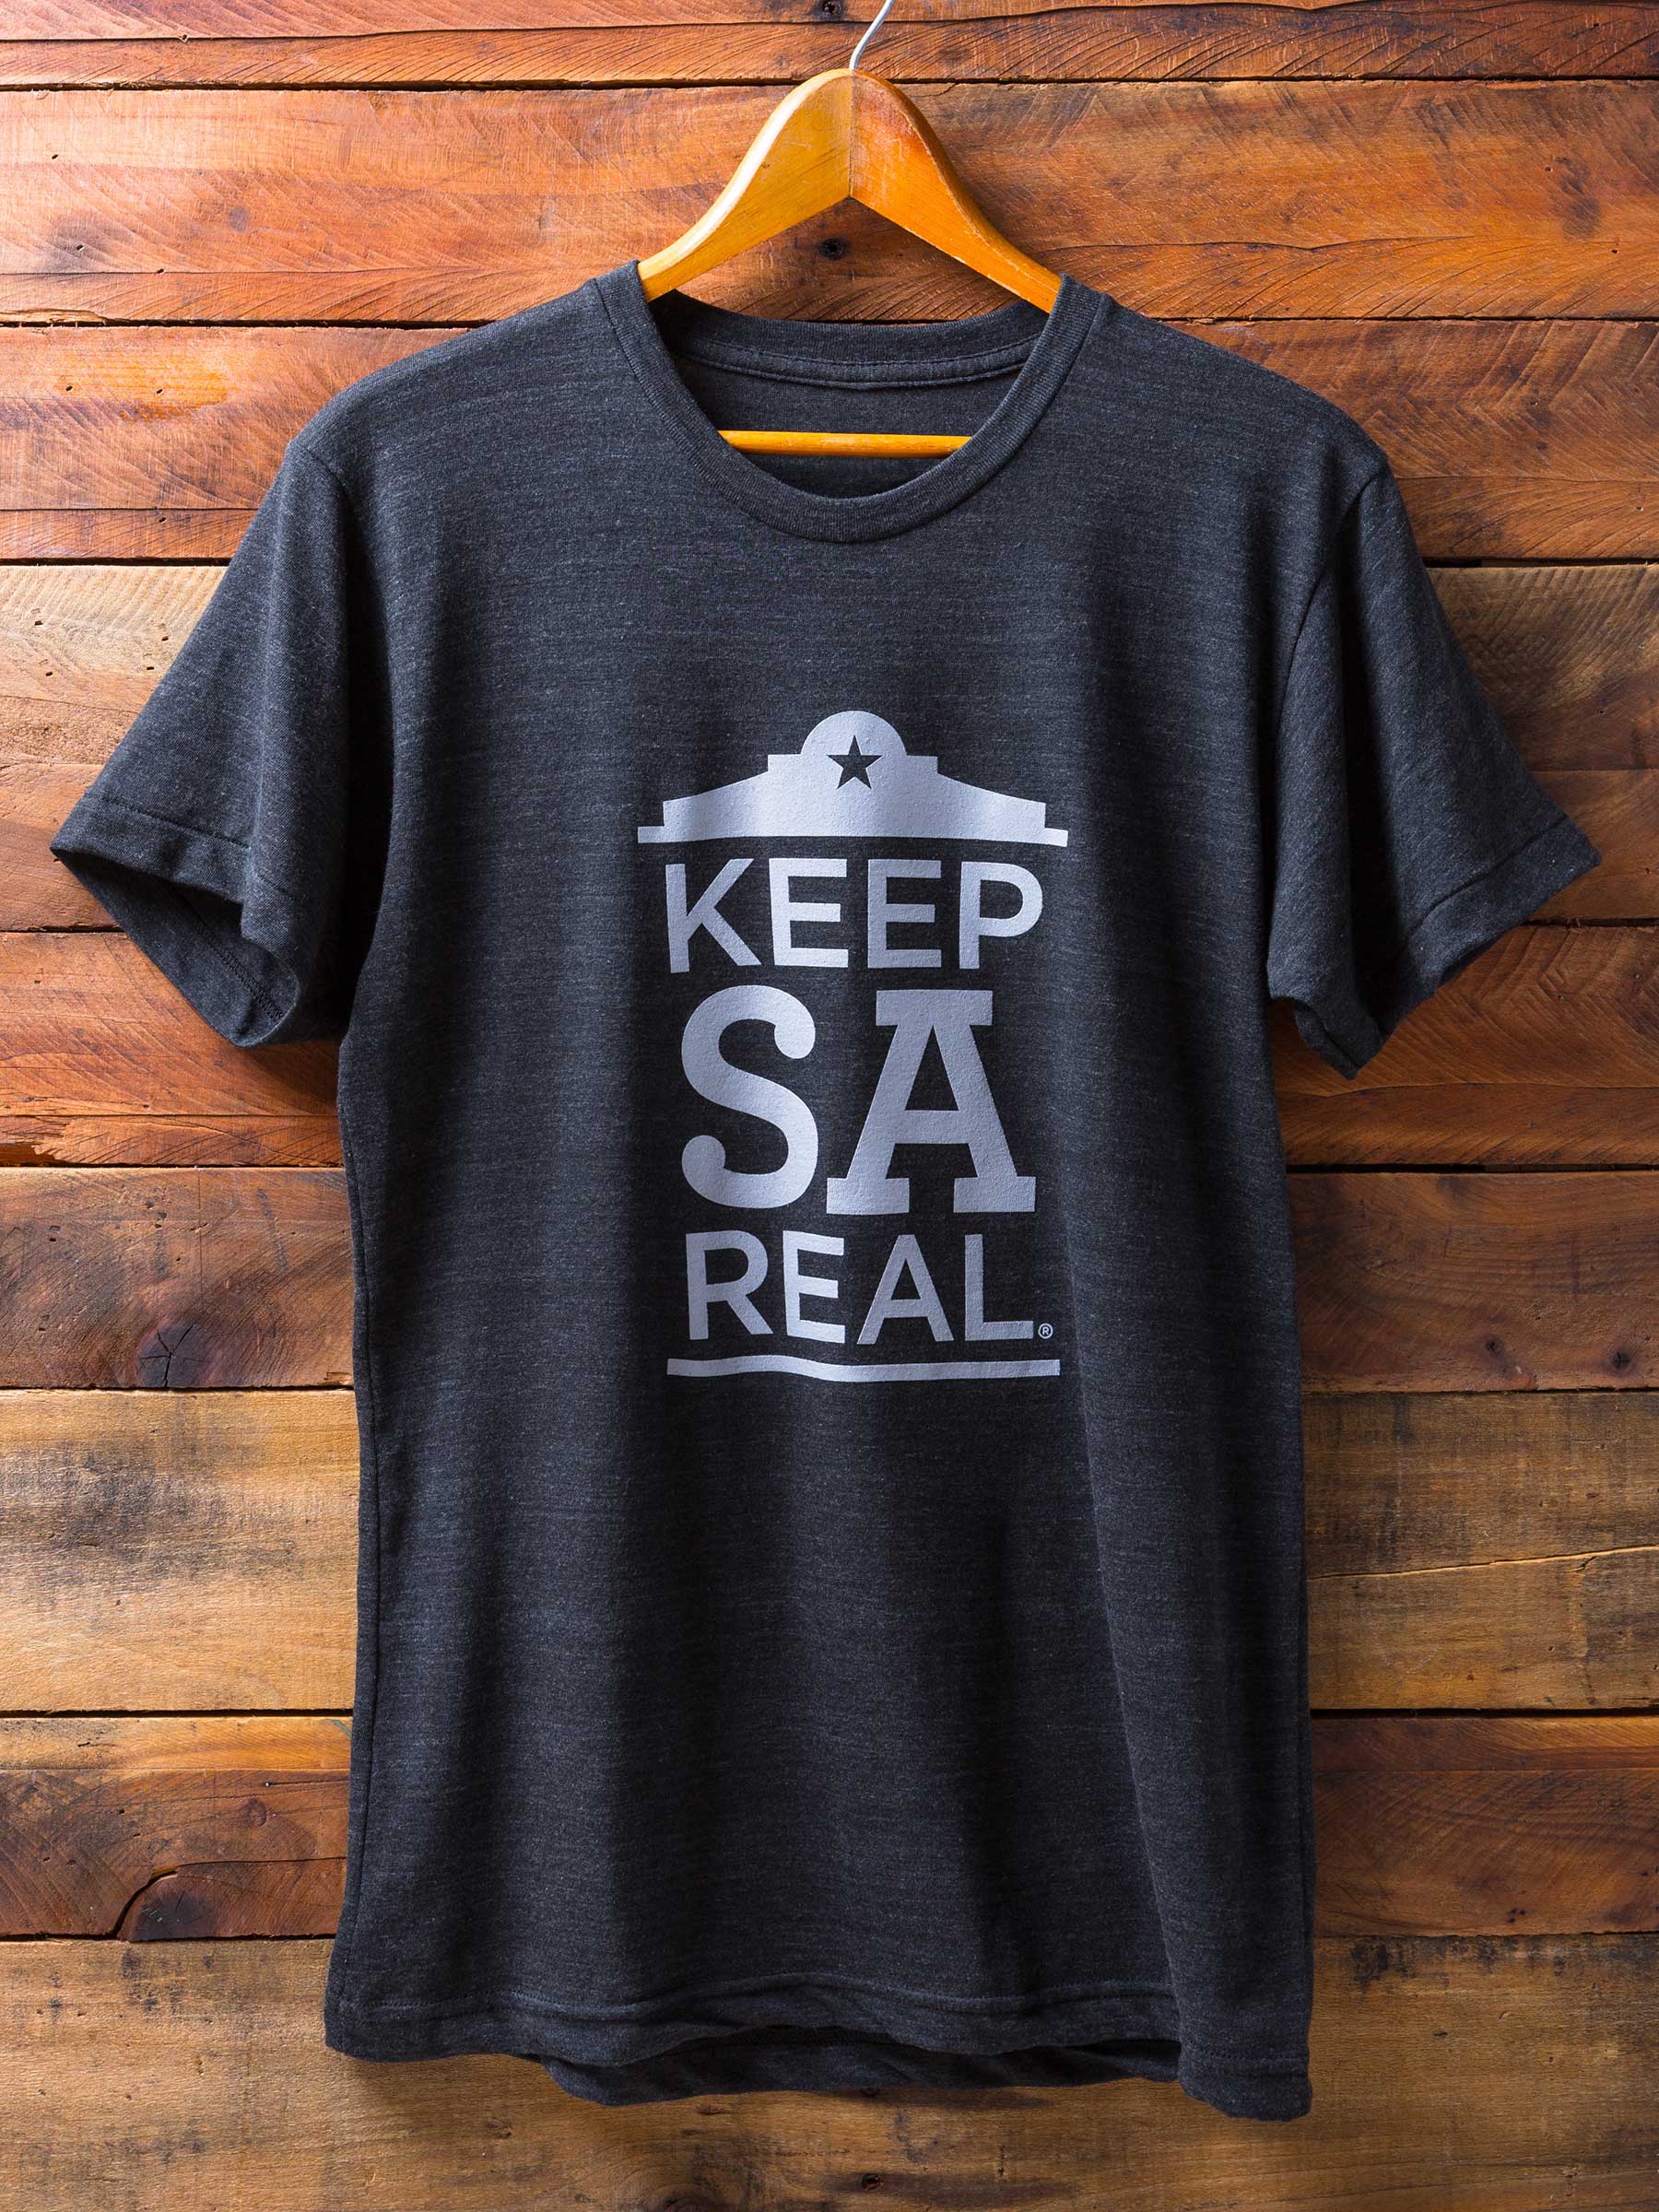 Keep SA Real T-shirt by Heavy Heavy